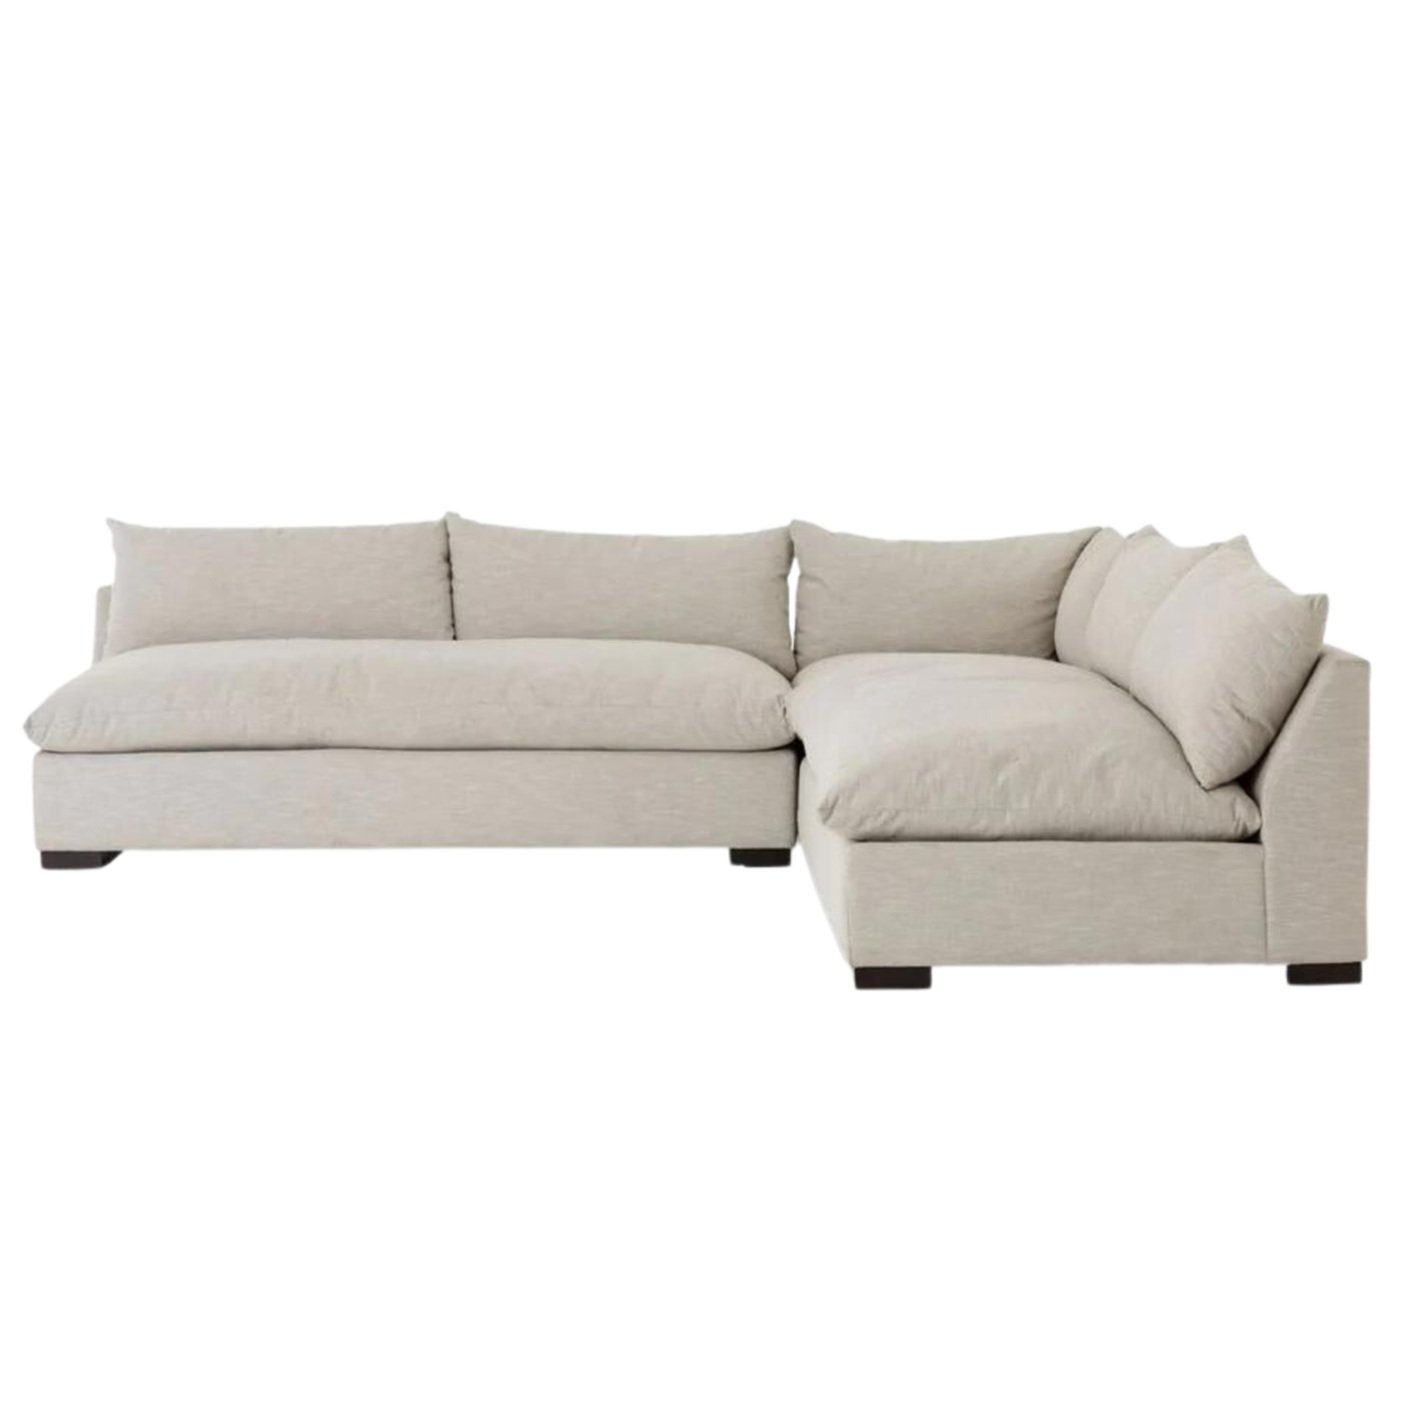 Decima Sofa